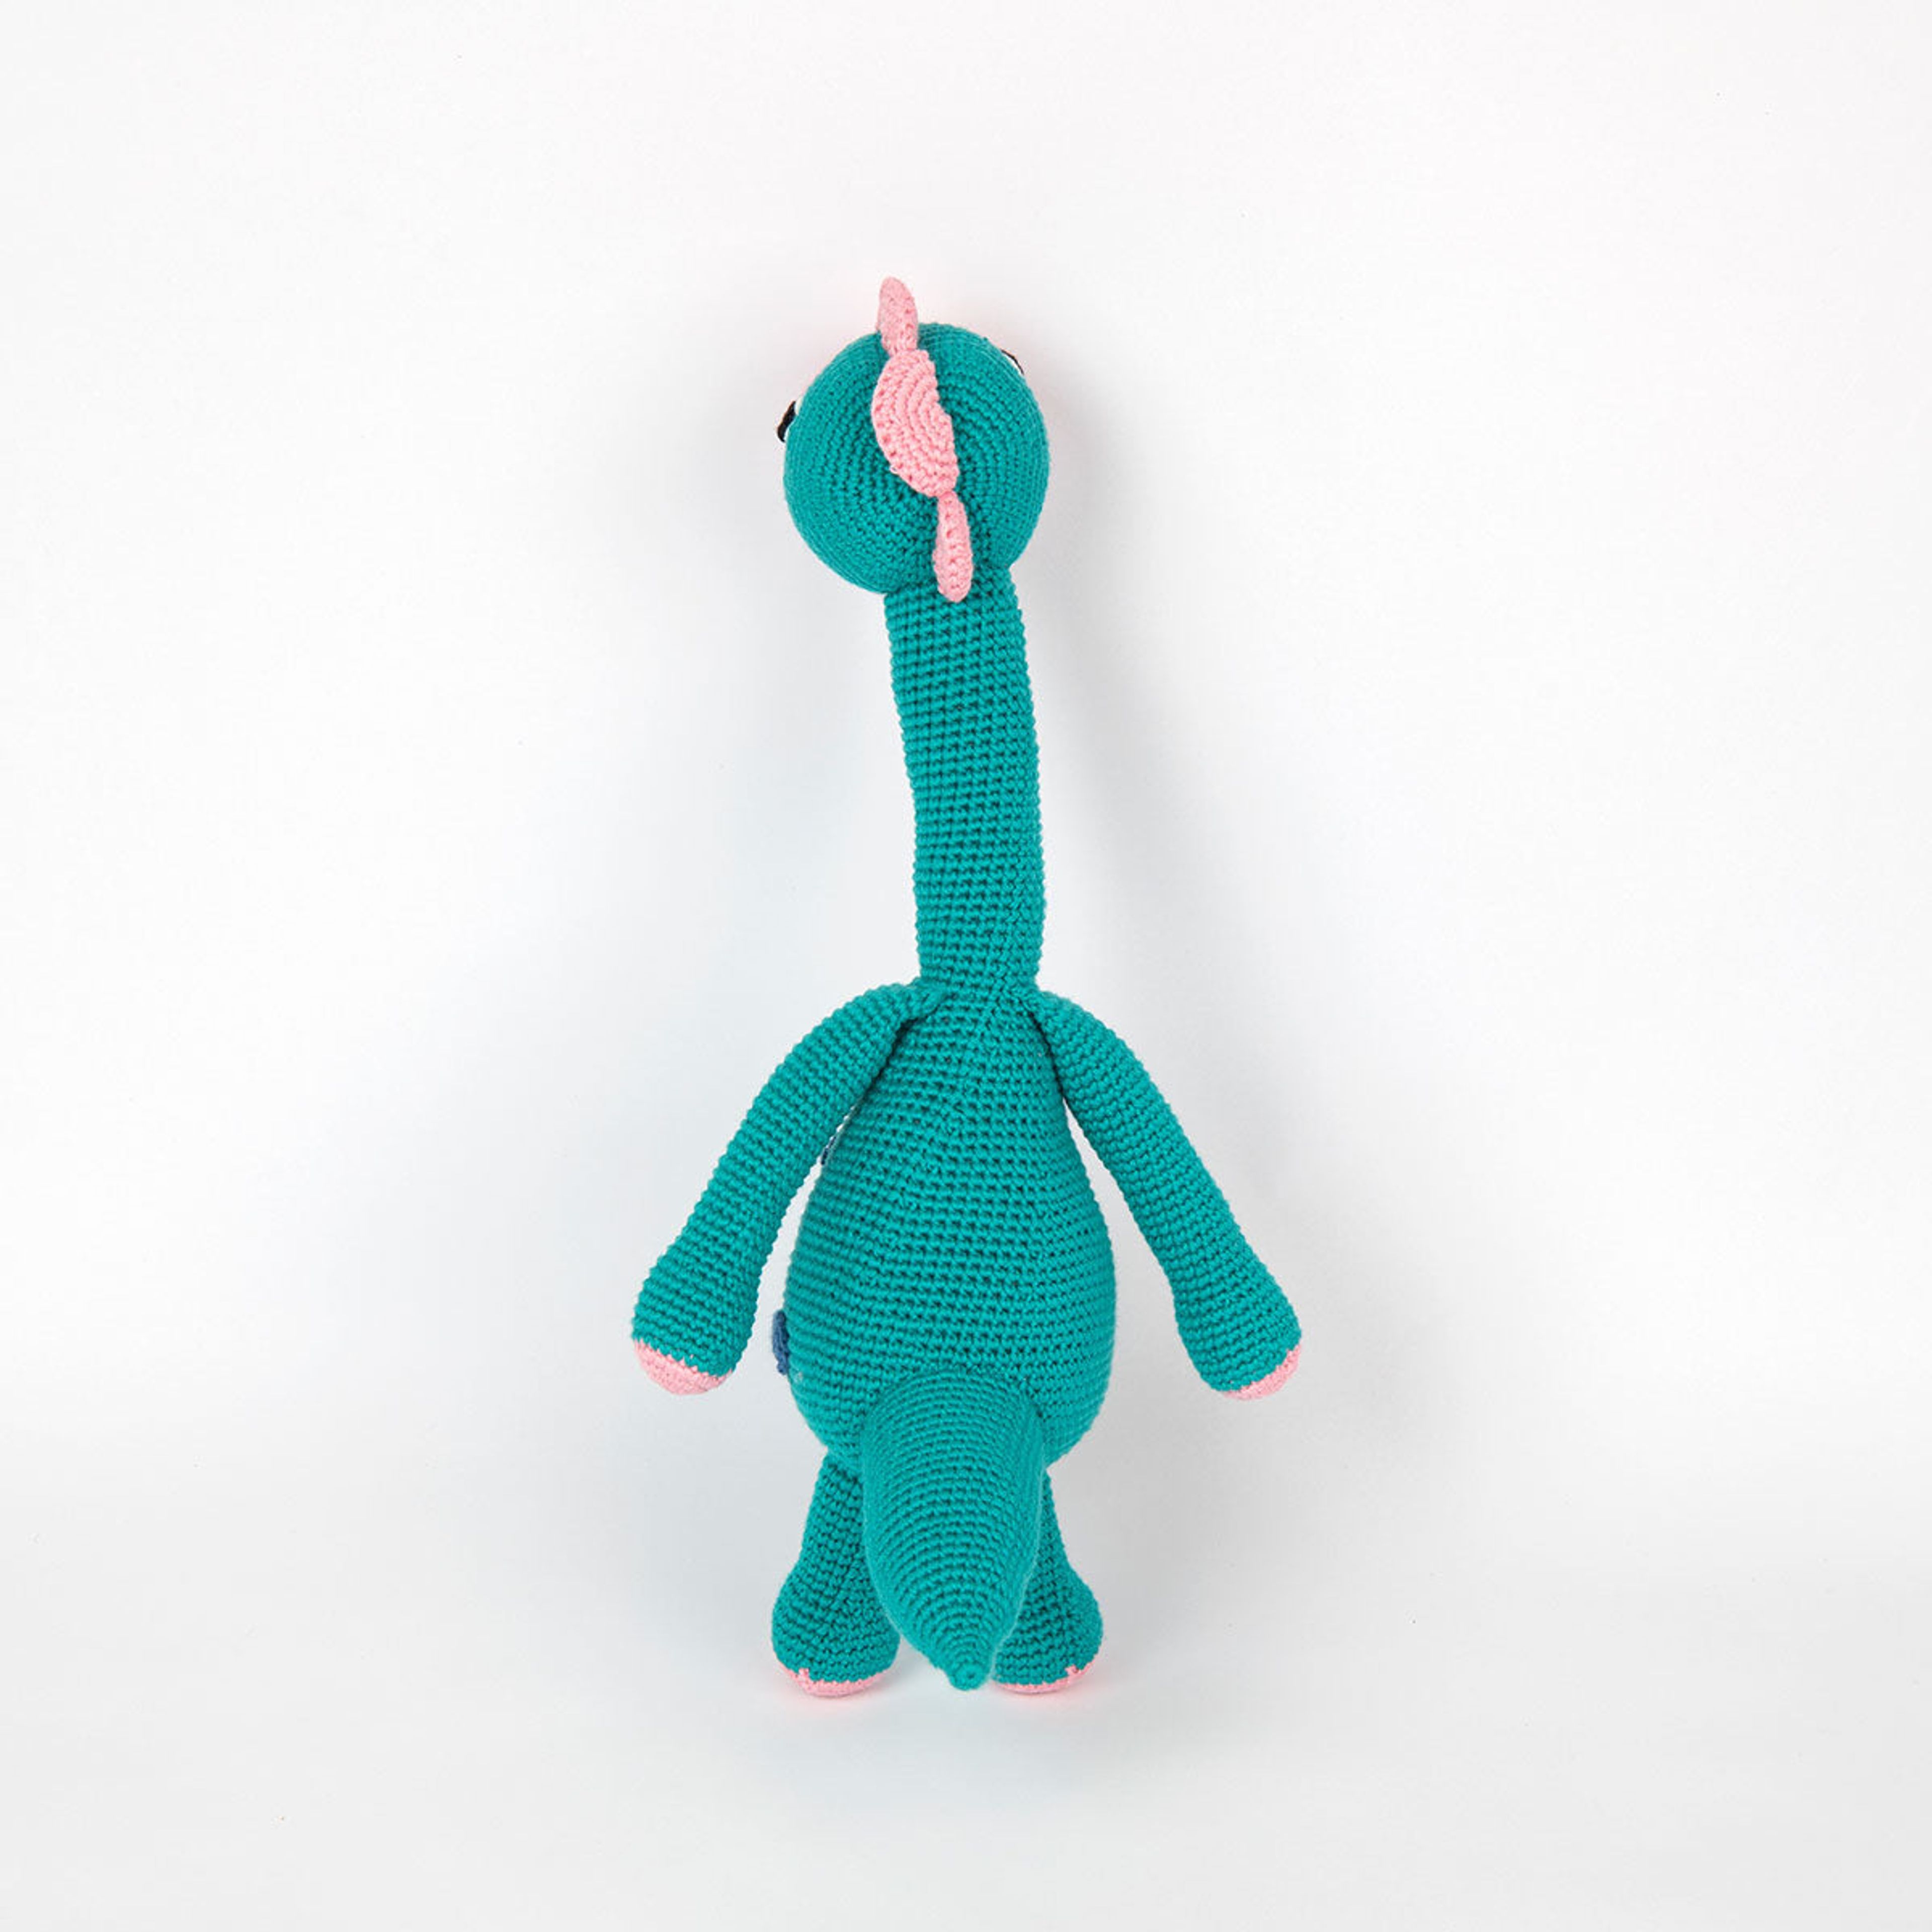 Danny the Dinosaur Hand Knitted Organic Stuffed Animal